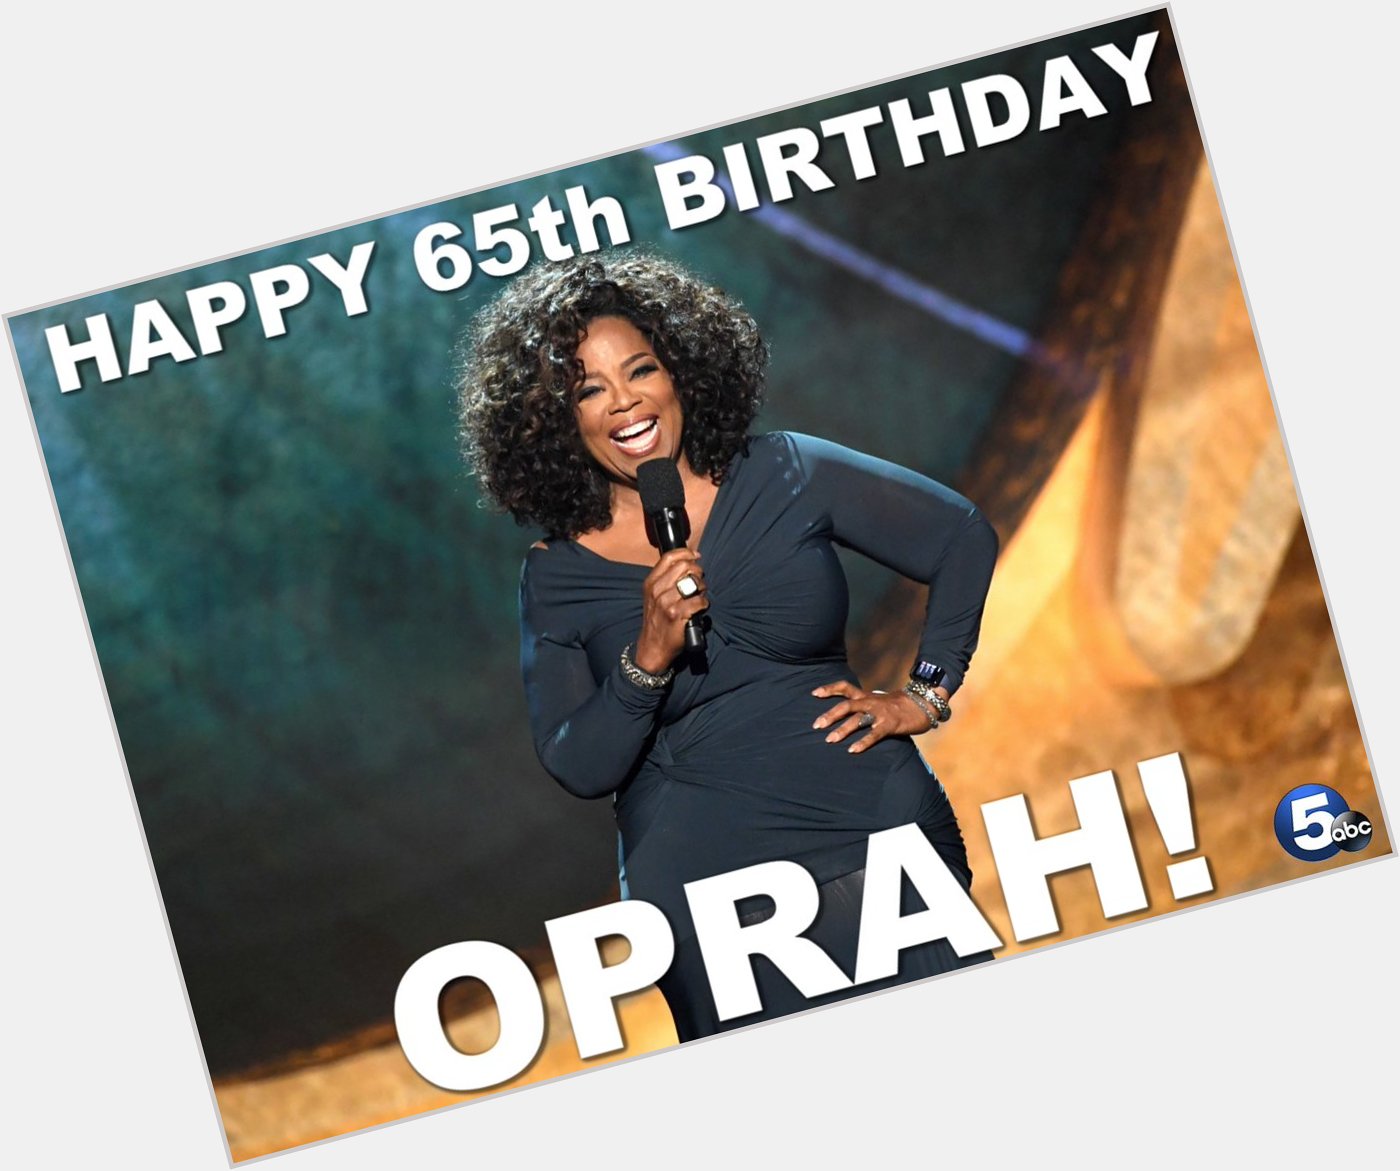 Help us wish Oprah Winfrey, a philanthropist, producer and host, a very happy birthday! 